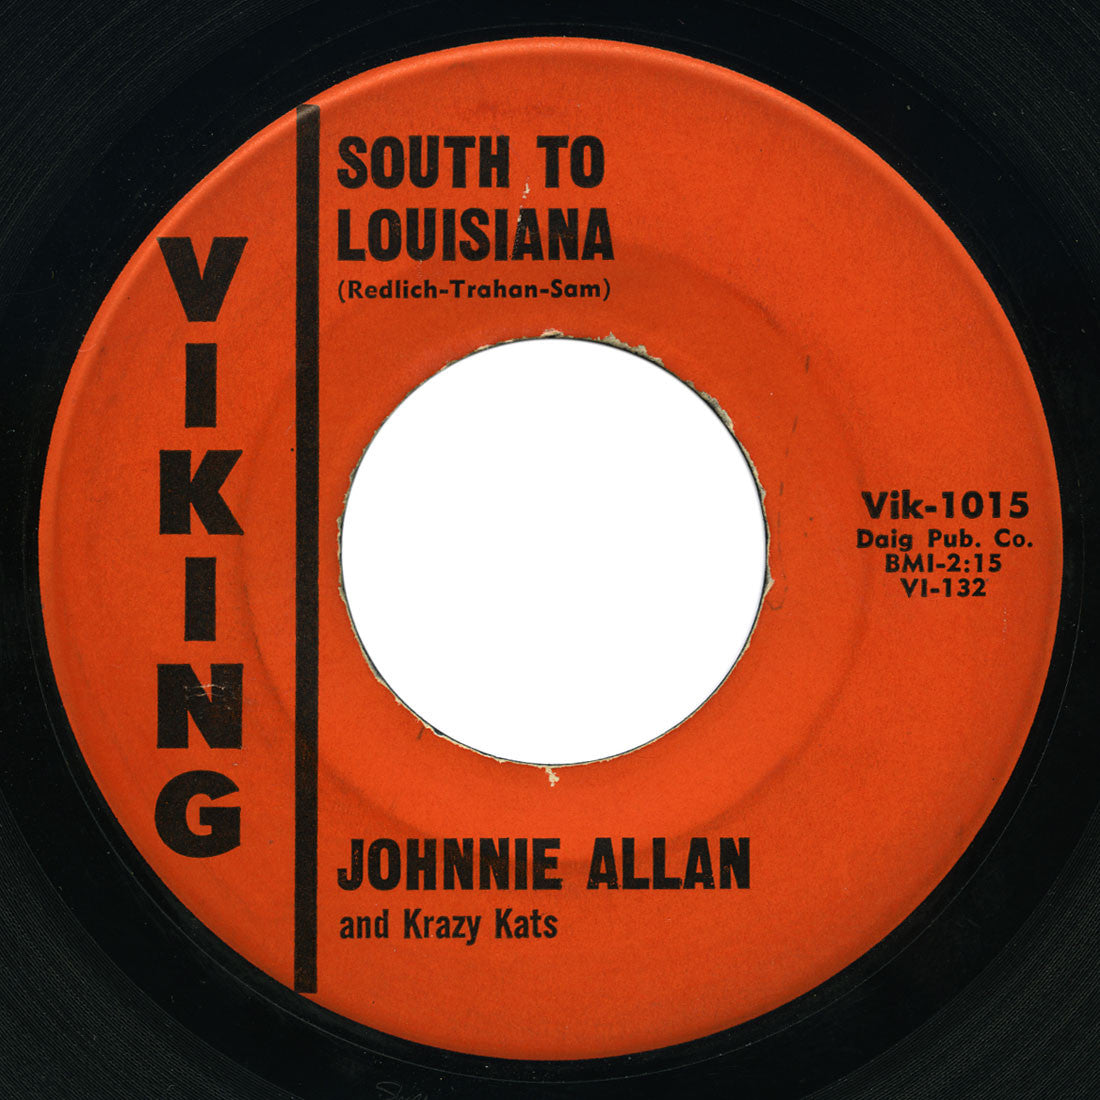 Johnnie Allan and Krazy Kats - South To Louisiana / If You Do Dear - Viking